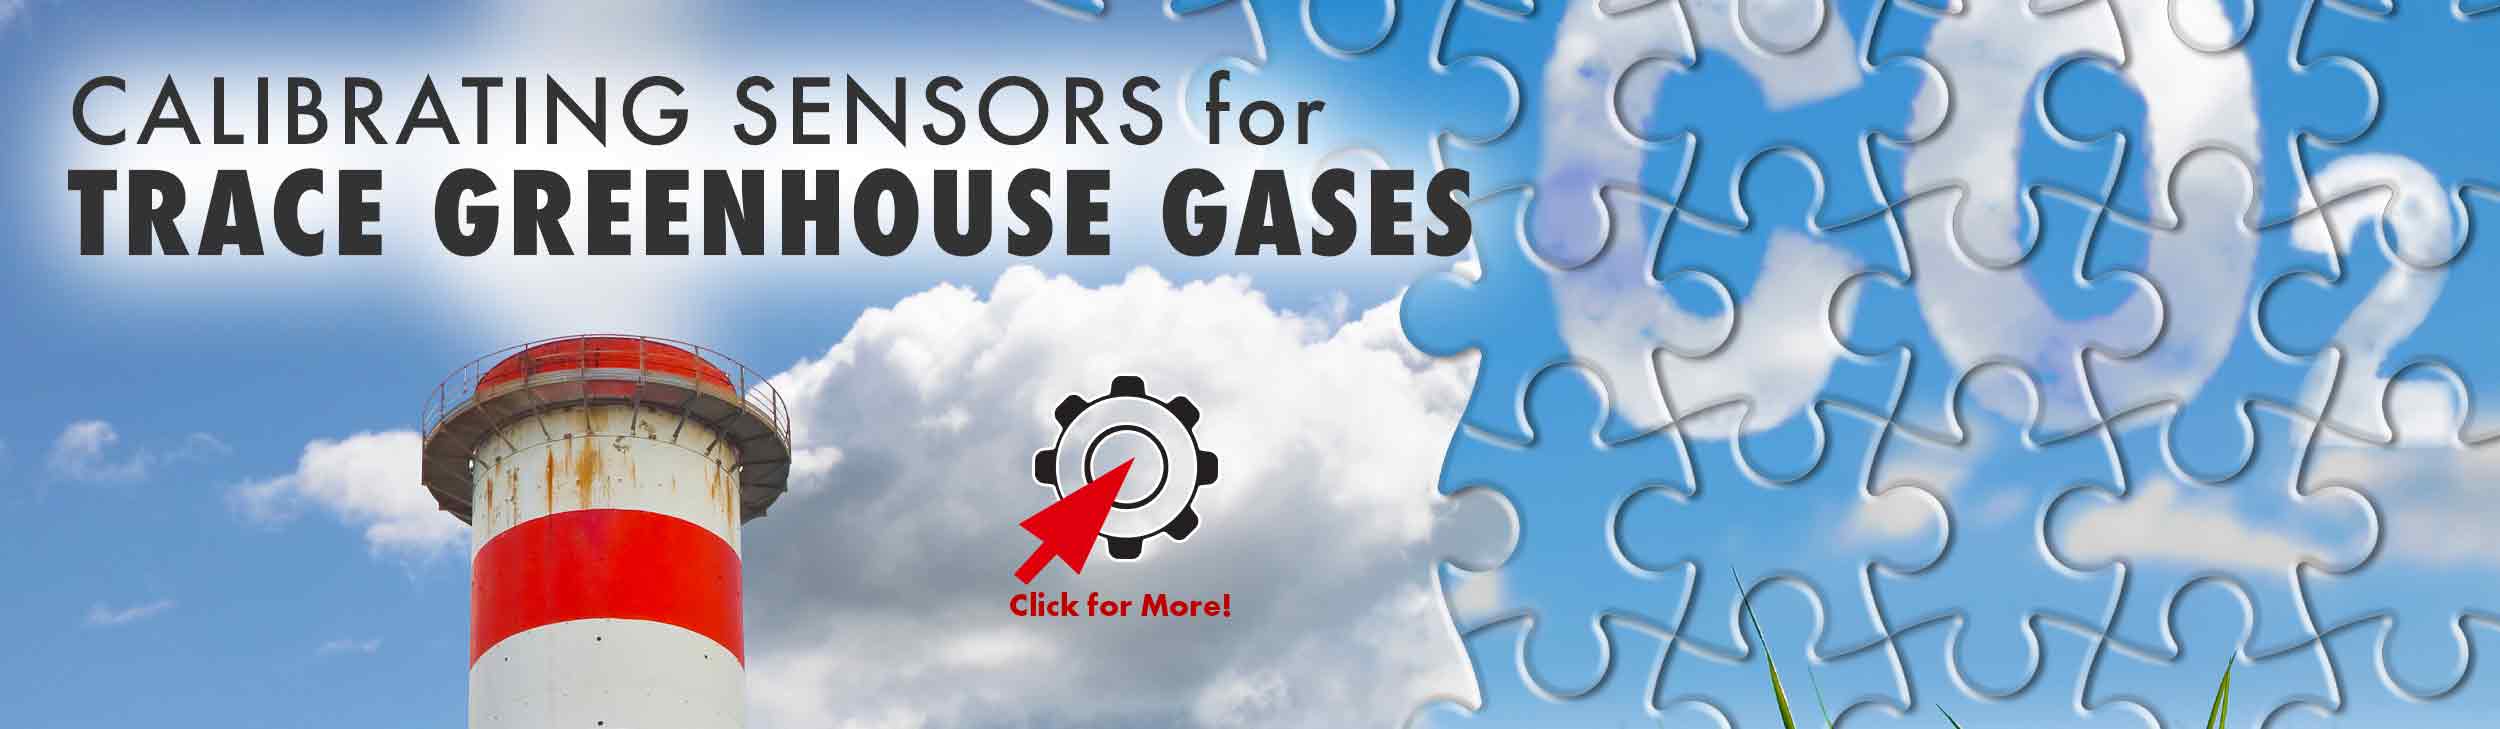 Calibrating Sensors for Greenhouse gases